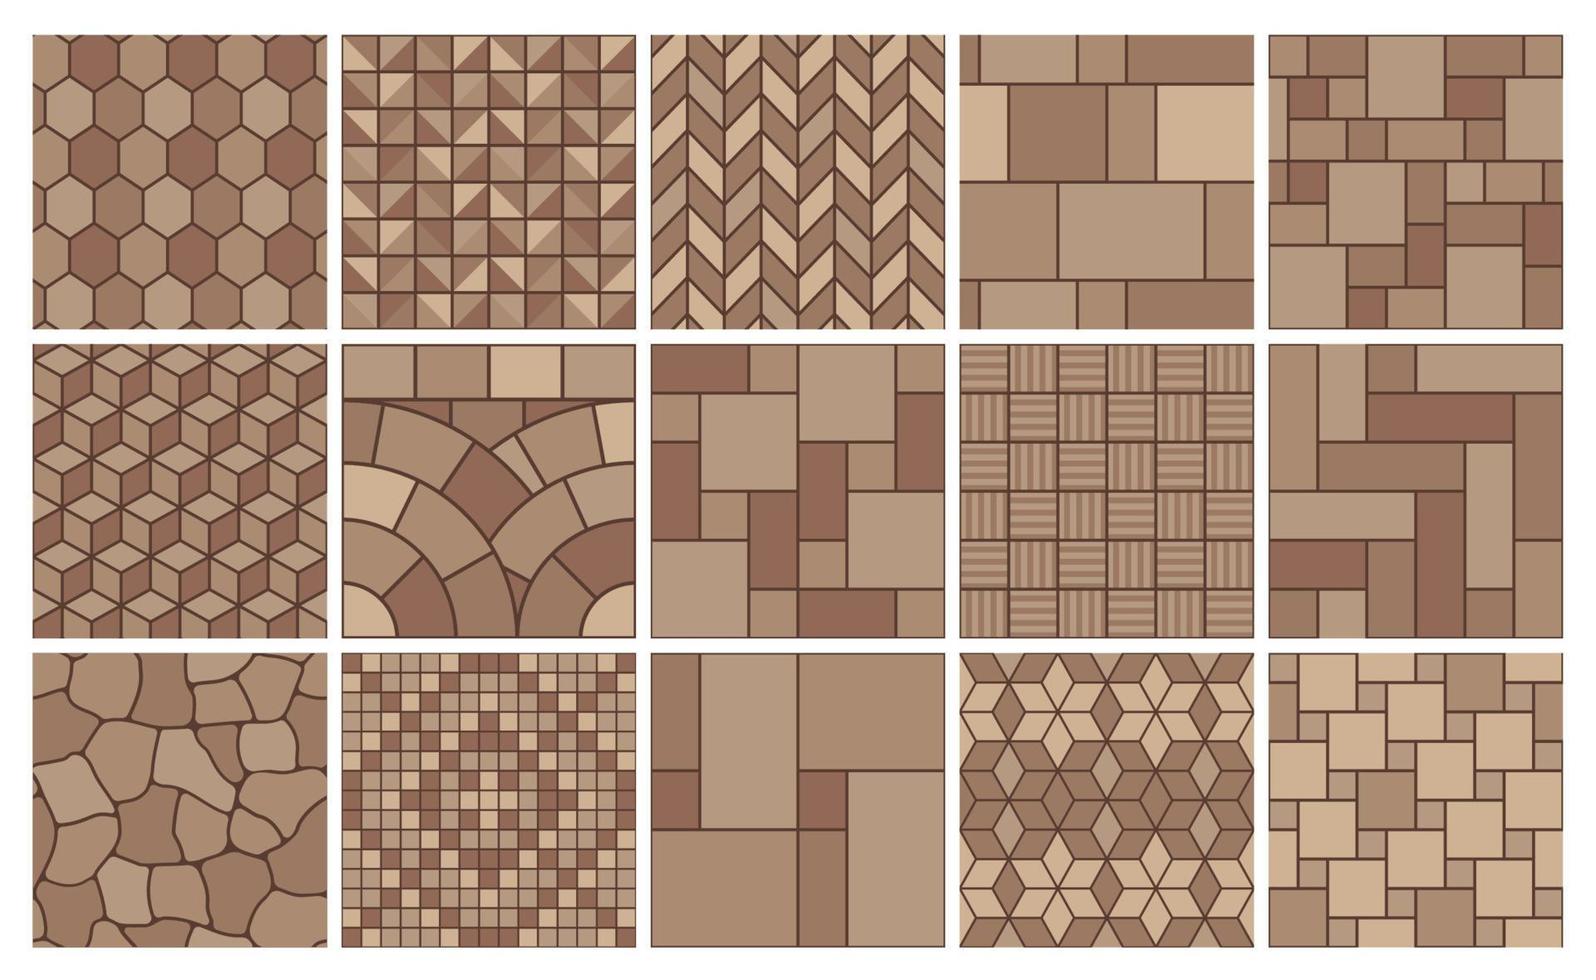 Stone pavement seamless patterns, street paving vector